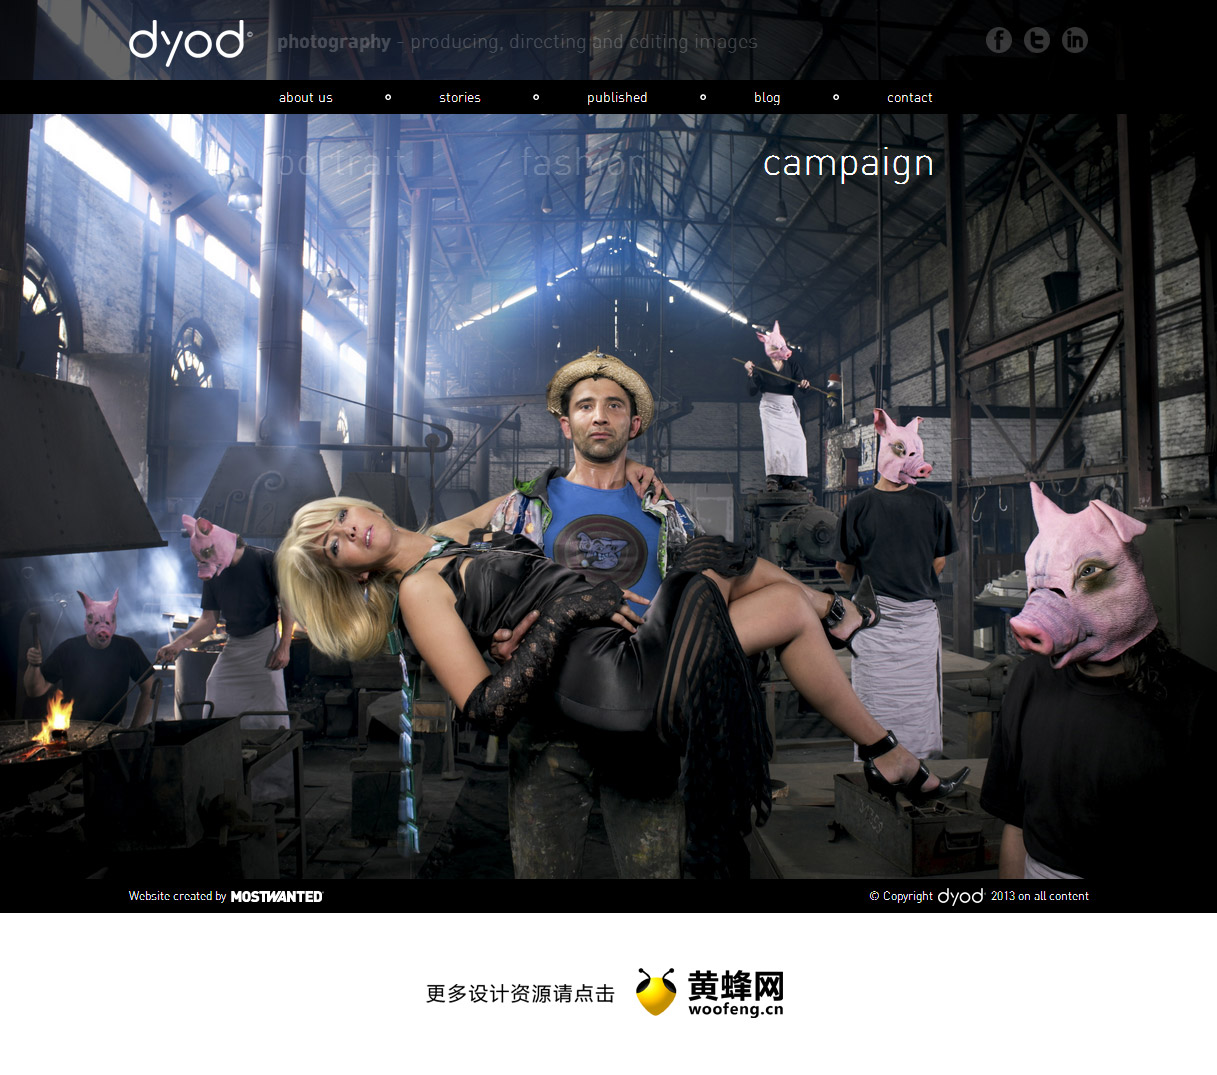 Dyod摄影，制作，导演和编辑图像，来源自黄蜂网https://woofeng.cn/web/